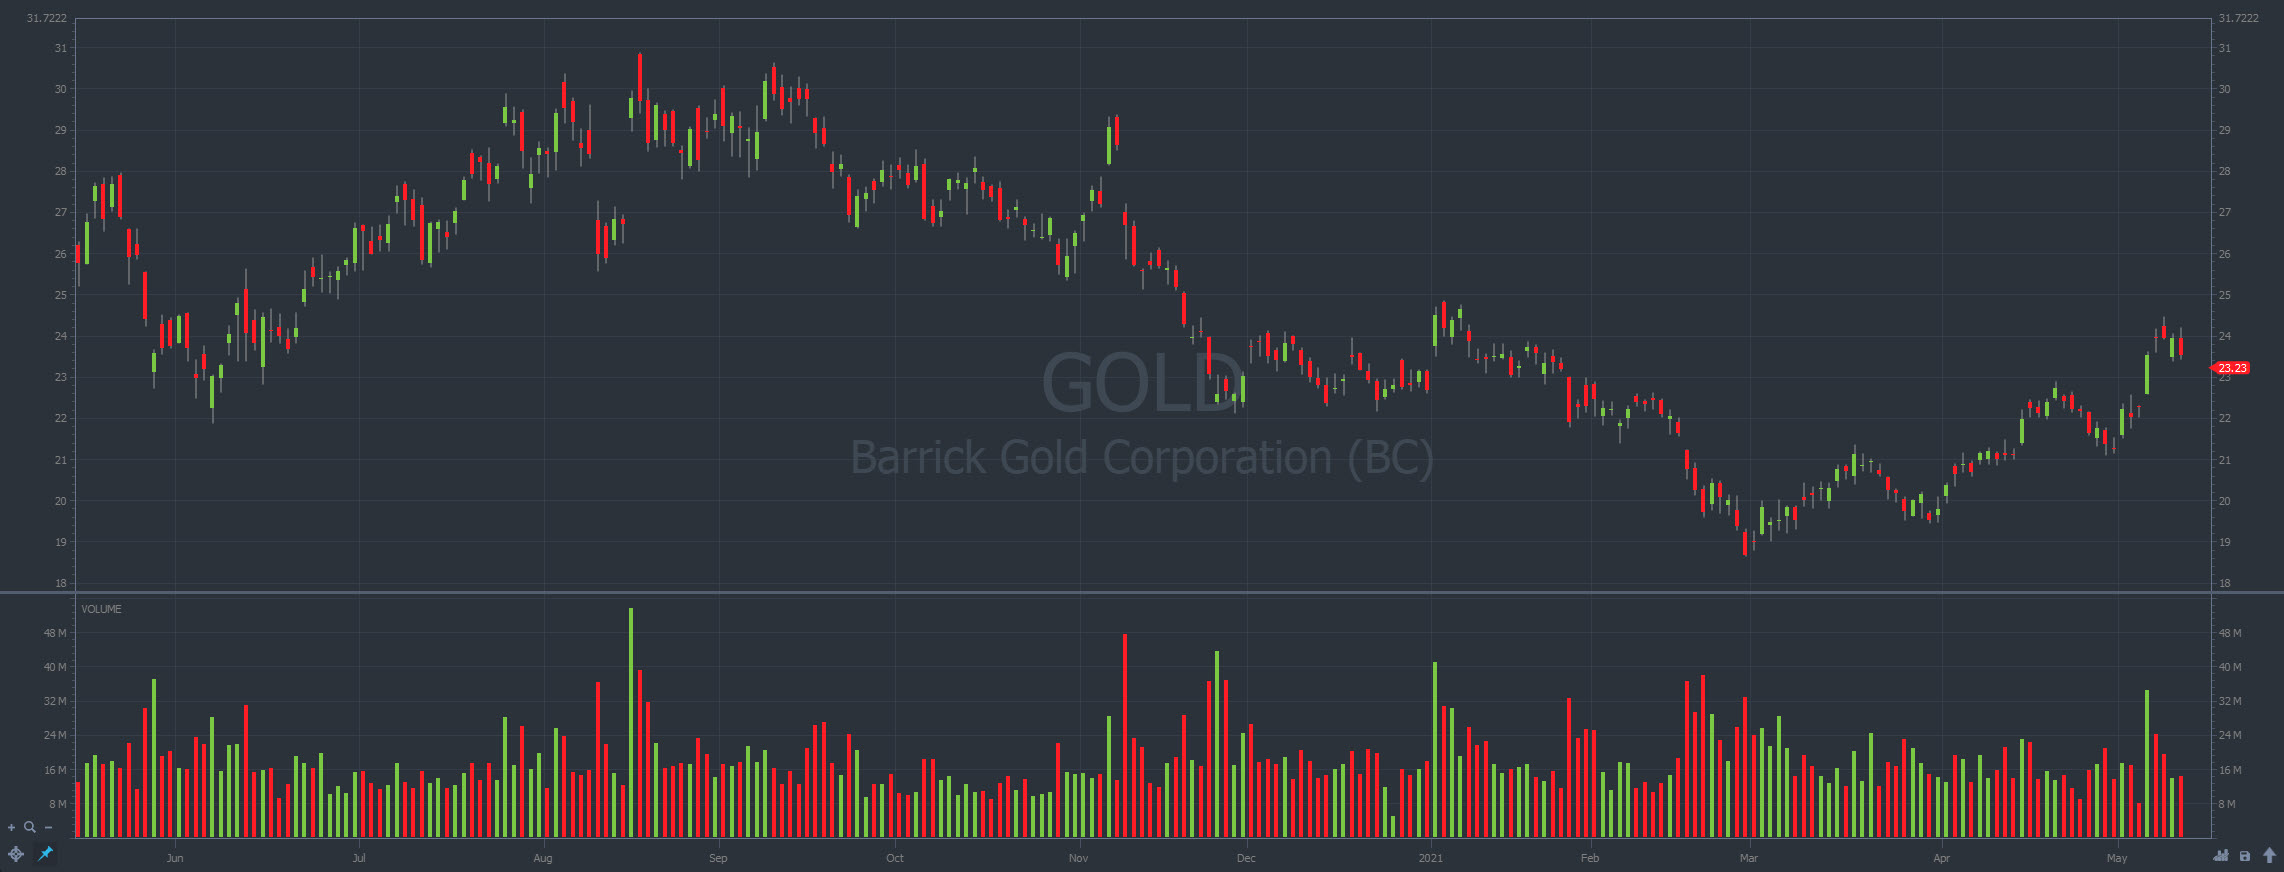 gold & silver stocks